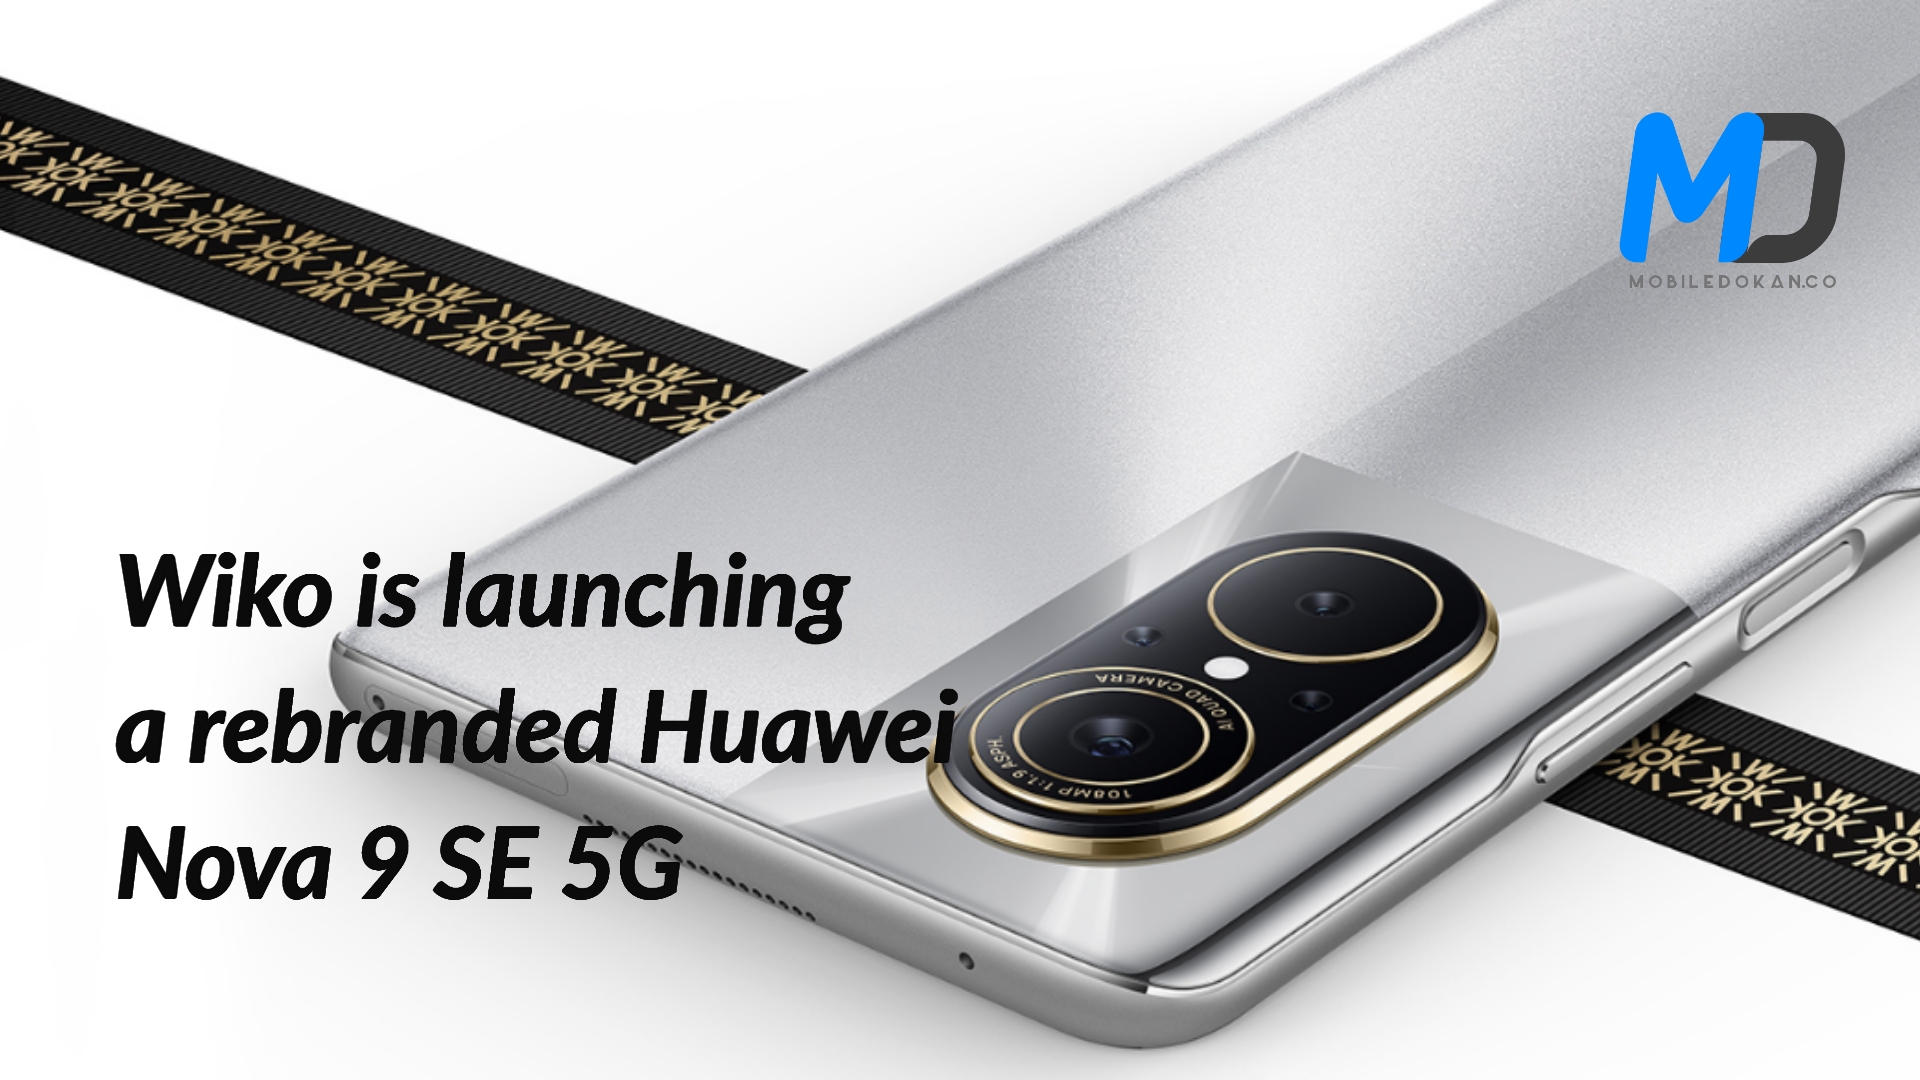 Wiko is launching a rebranded Huawei nova 9 SE 5G on December 27